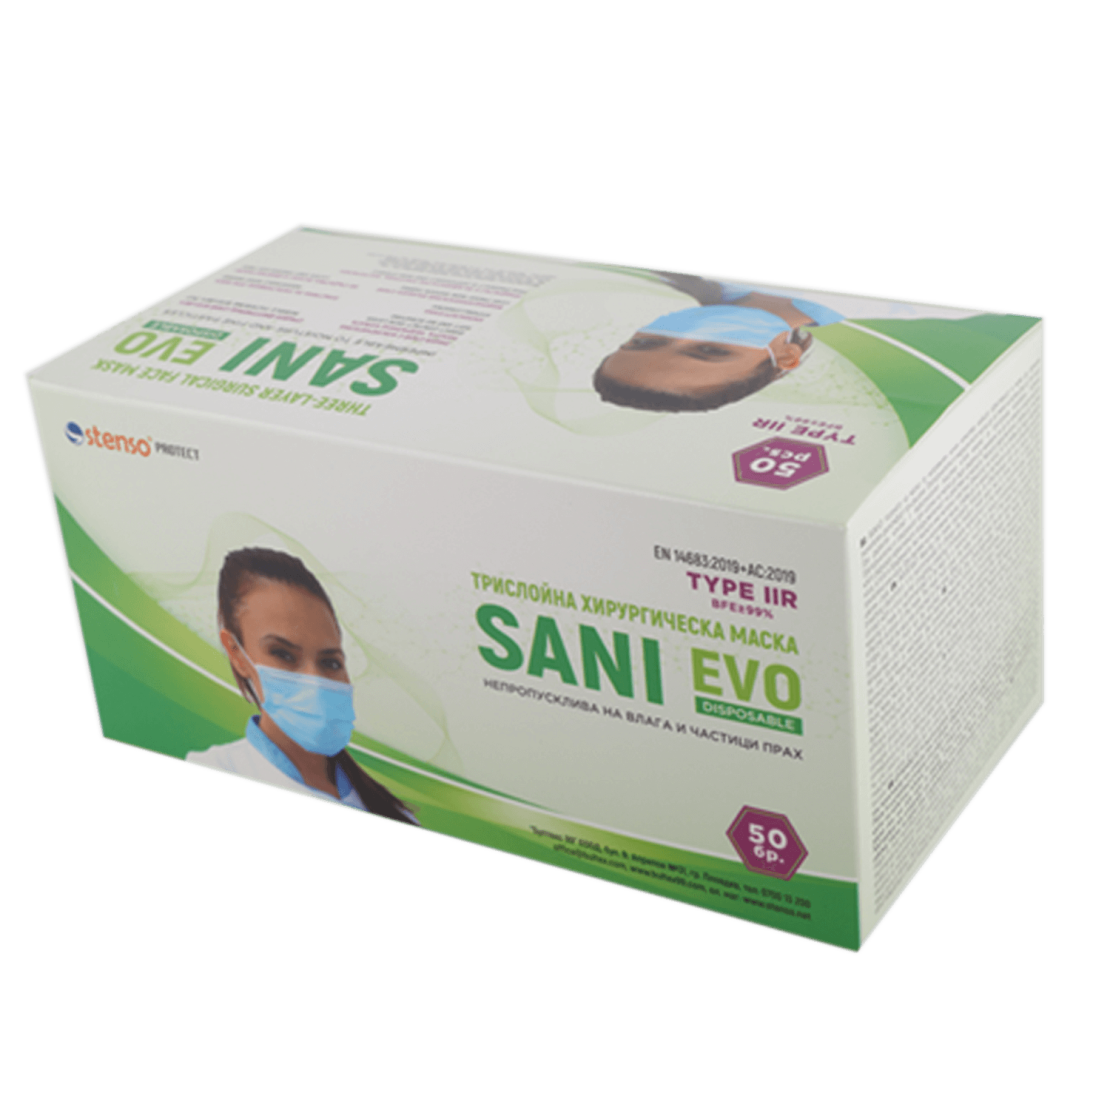 SANI EVO - FMN99 - TYPE IIR - 50 бр. Медицинска маска